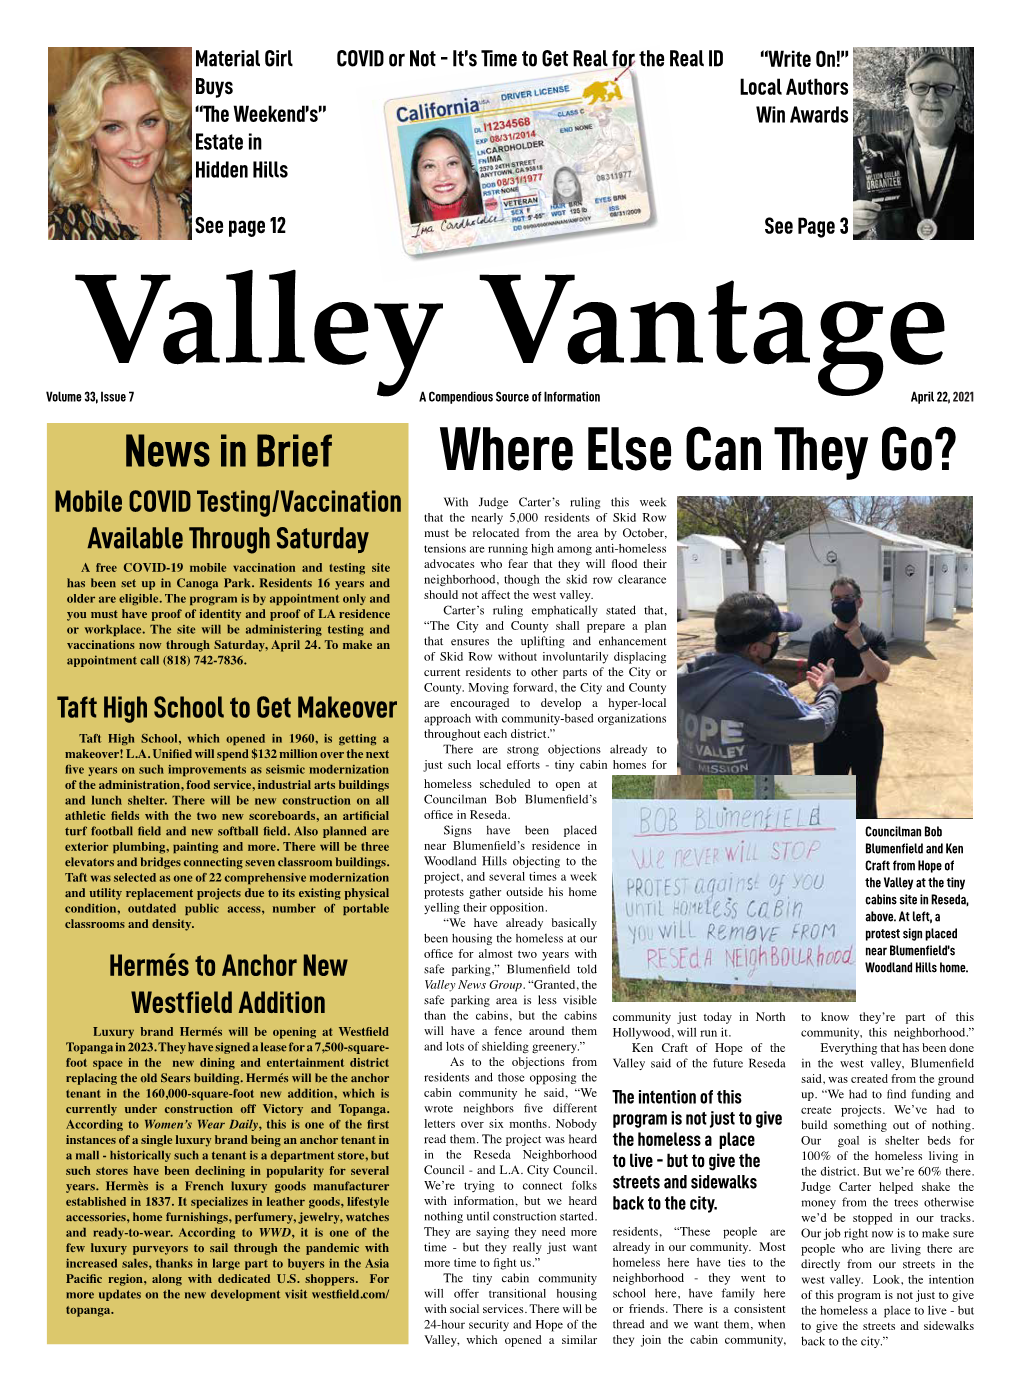 Valley Vantage, Warner News, Calabasas Enterprise and Encino Enterprise Are Published Weekly by Kathleen Sterling